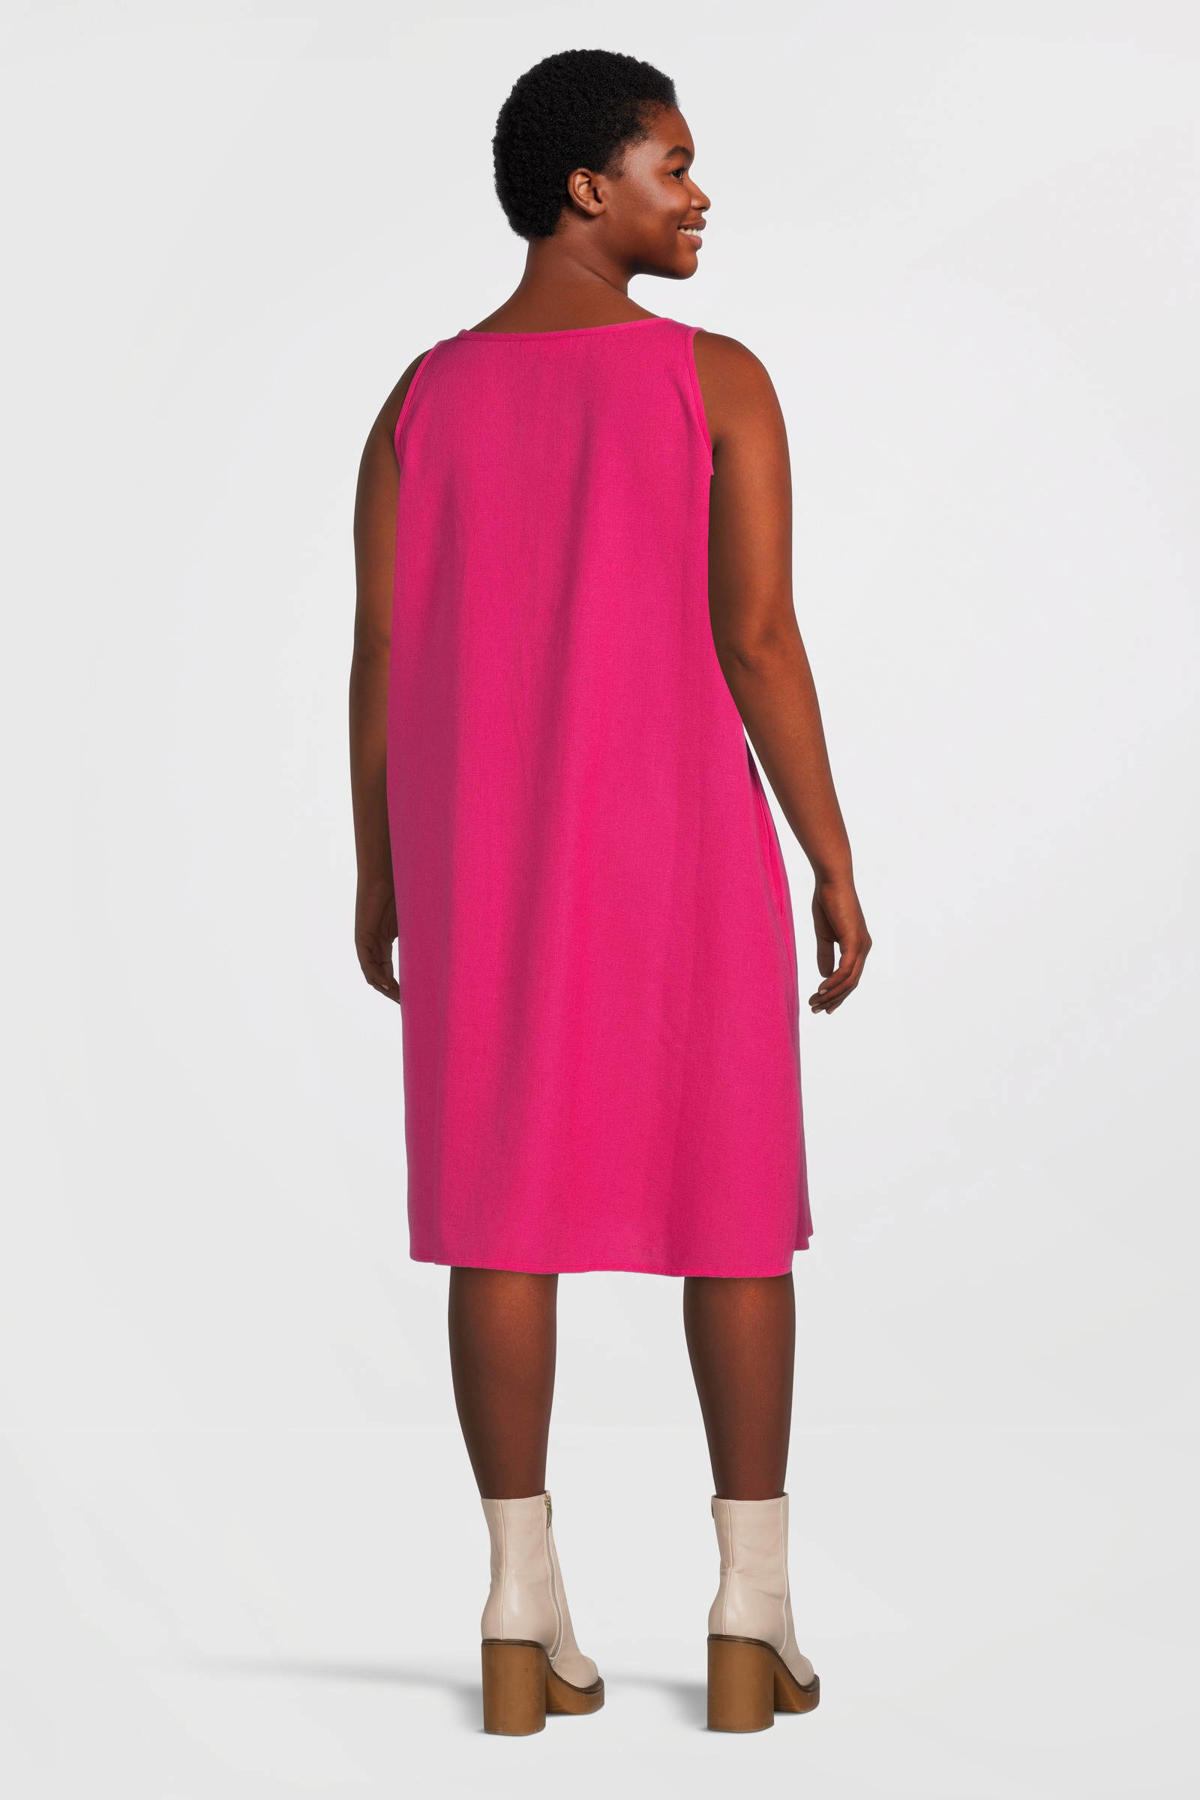 fusie satelliet Luxe Zhenzi A-lijn jurk SAVANNA roze | wehkamp